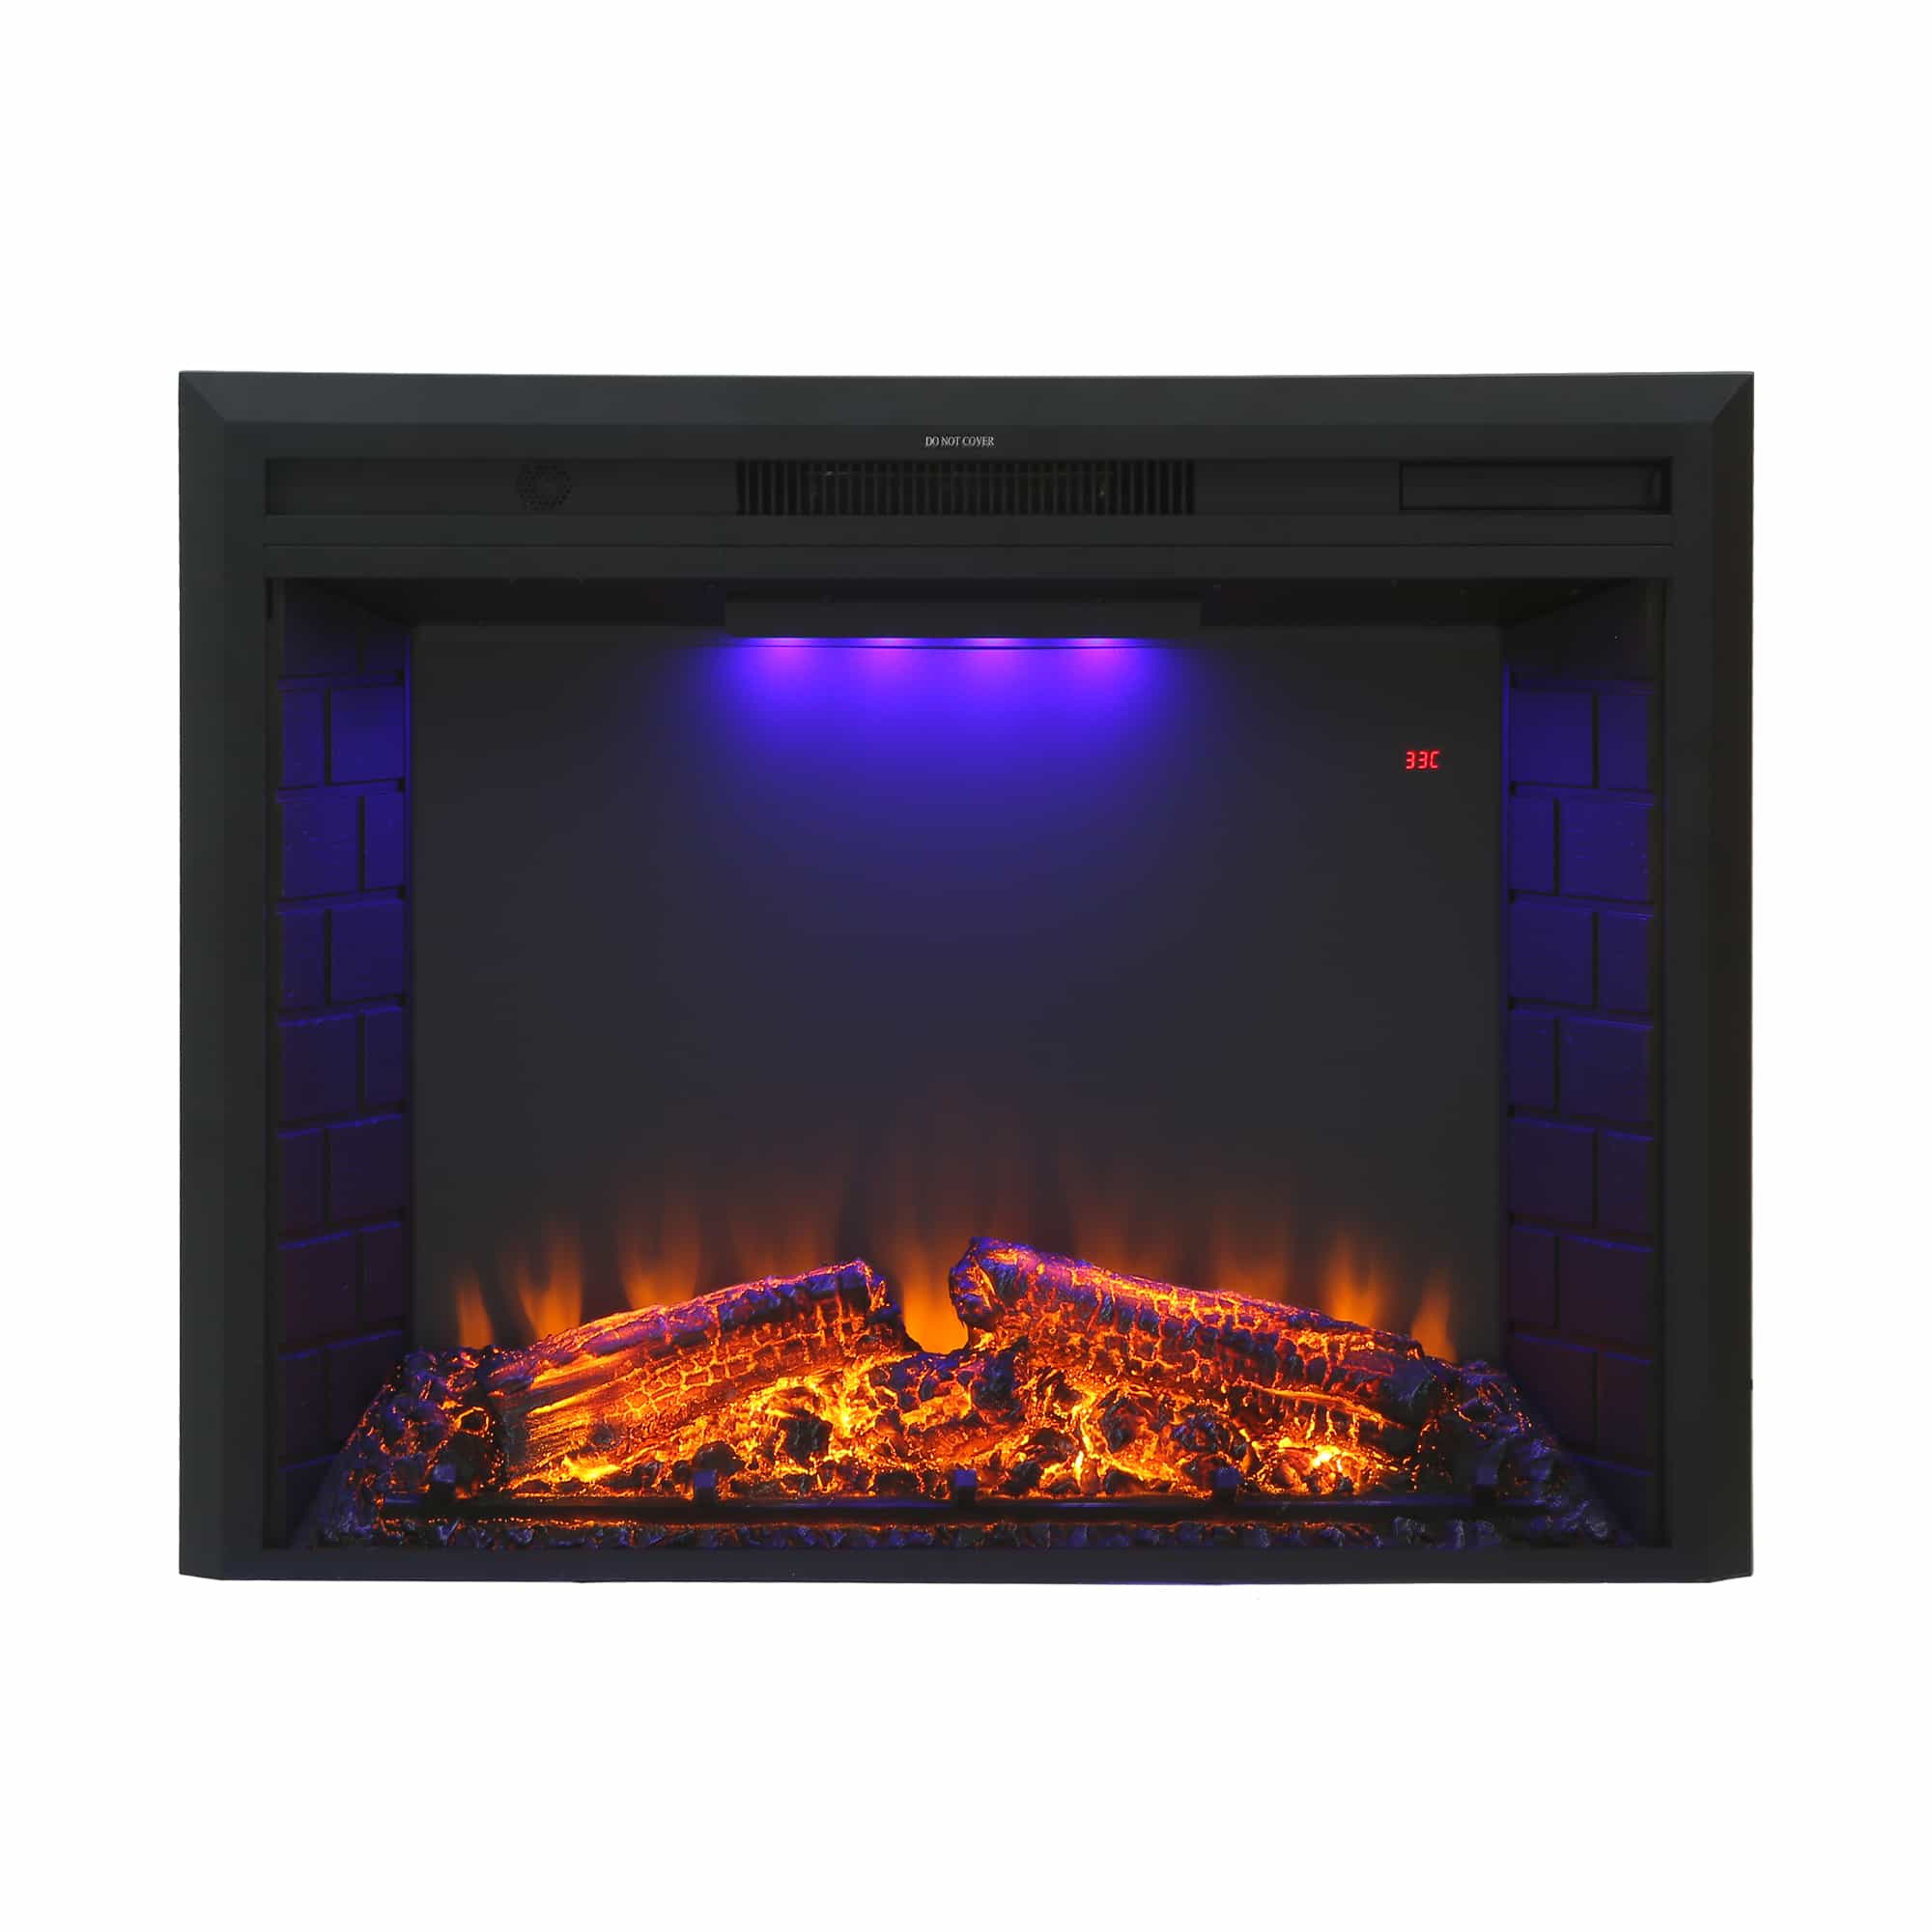 CASAINC 36 Inch LED Electric Fireplace Insert in Black-Casainc Canada